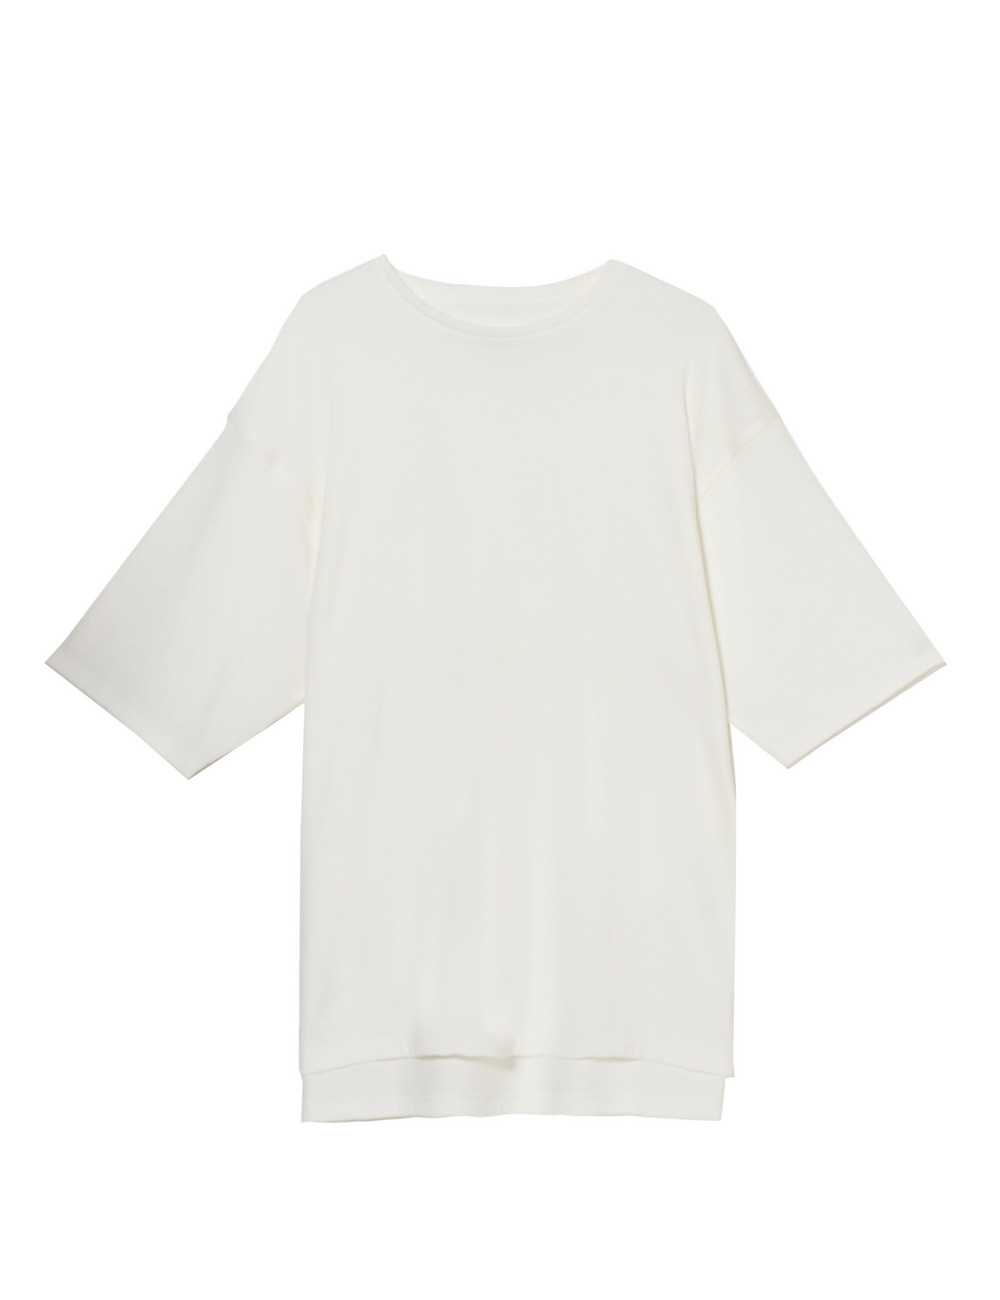 【MEN】スーピマエイジングコットンTシャツ 詳細画像 ホワイト 1